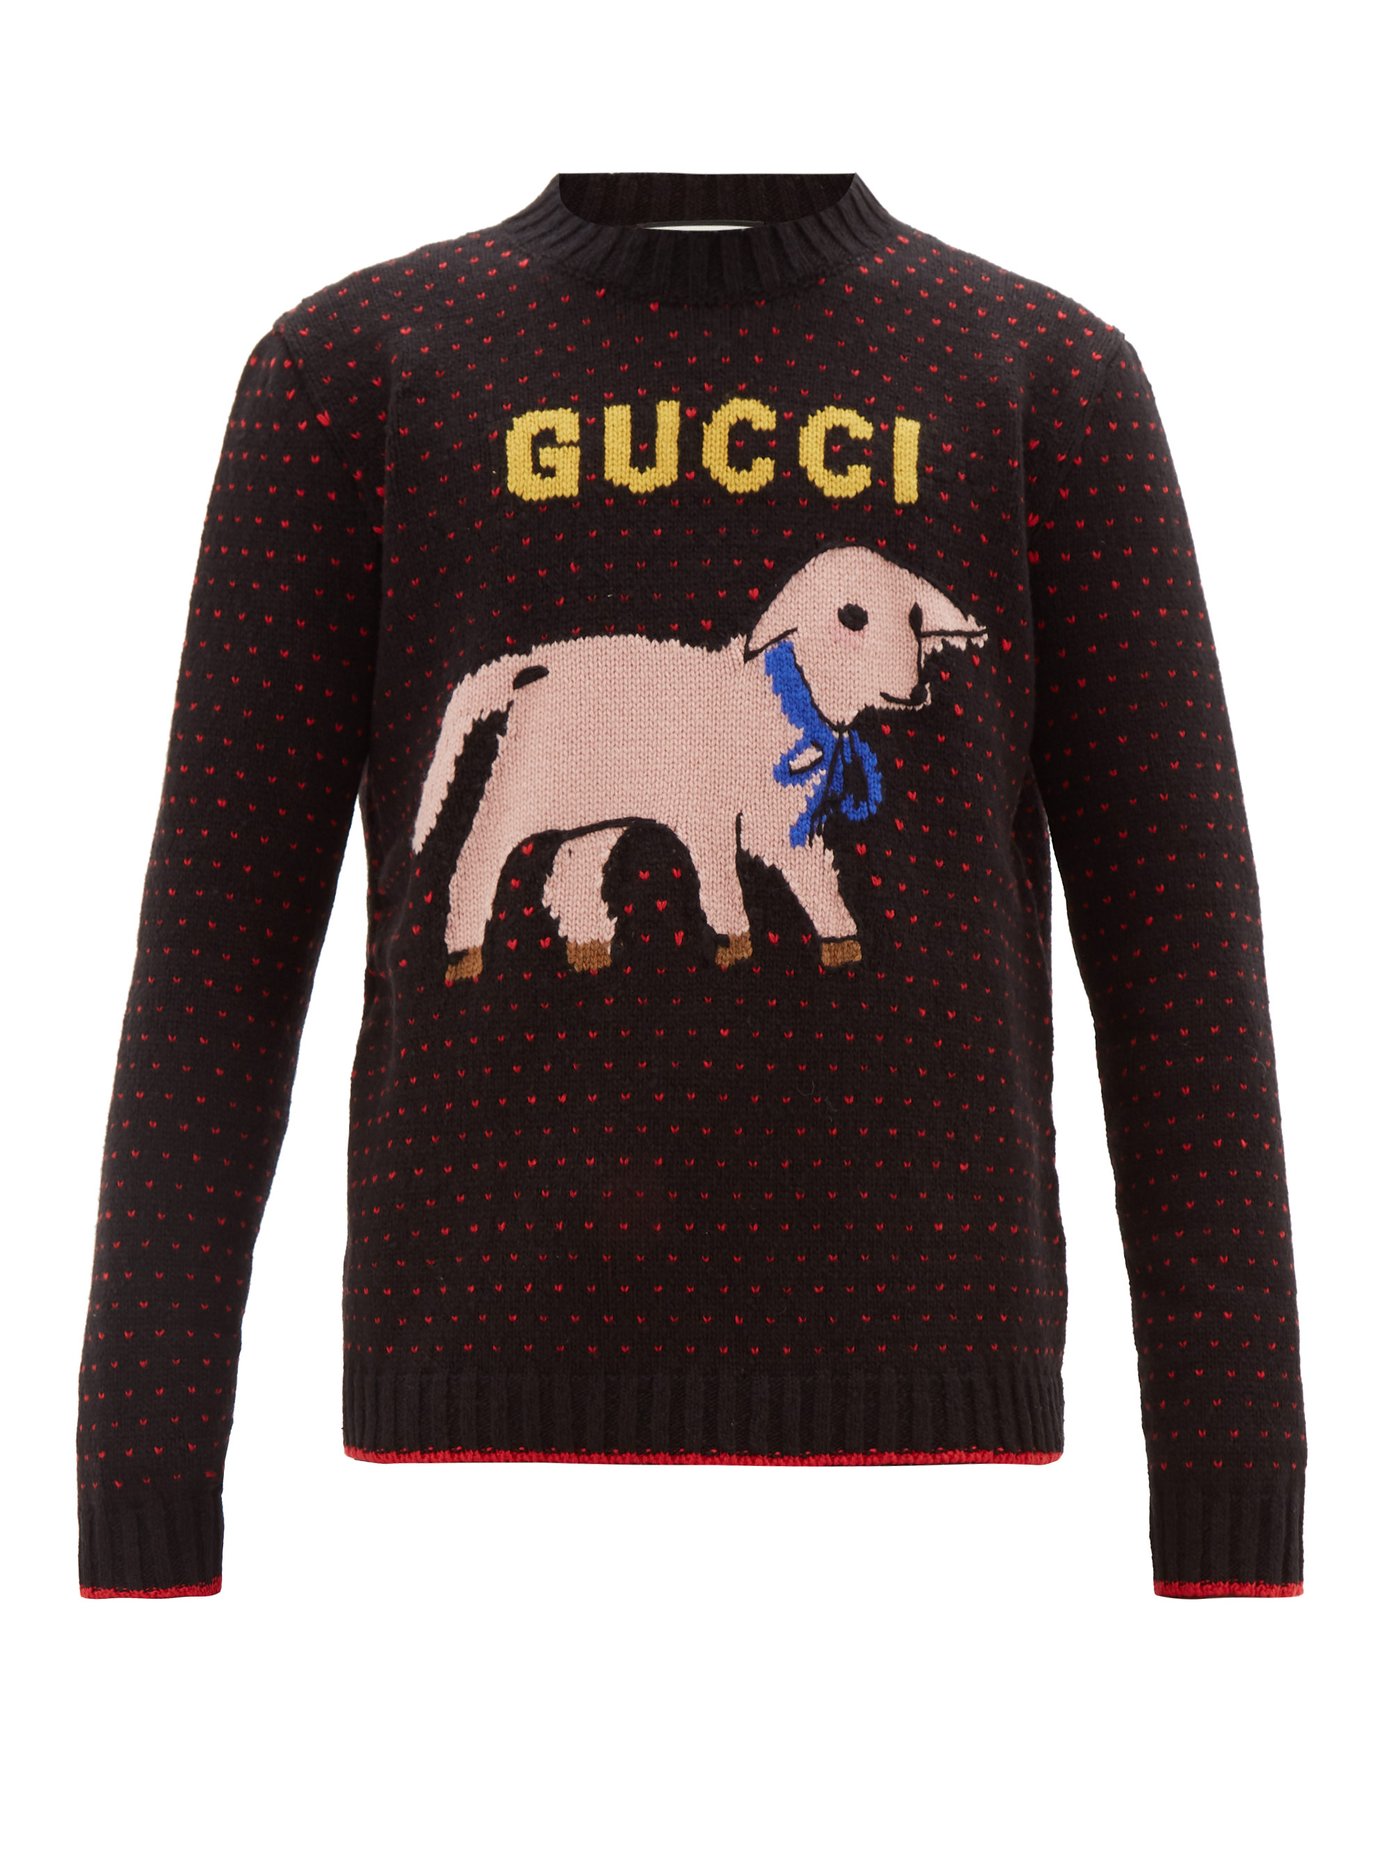 buy gucci sweater